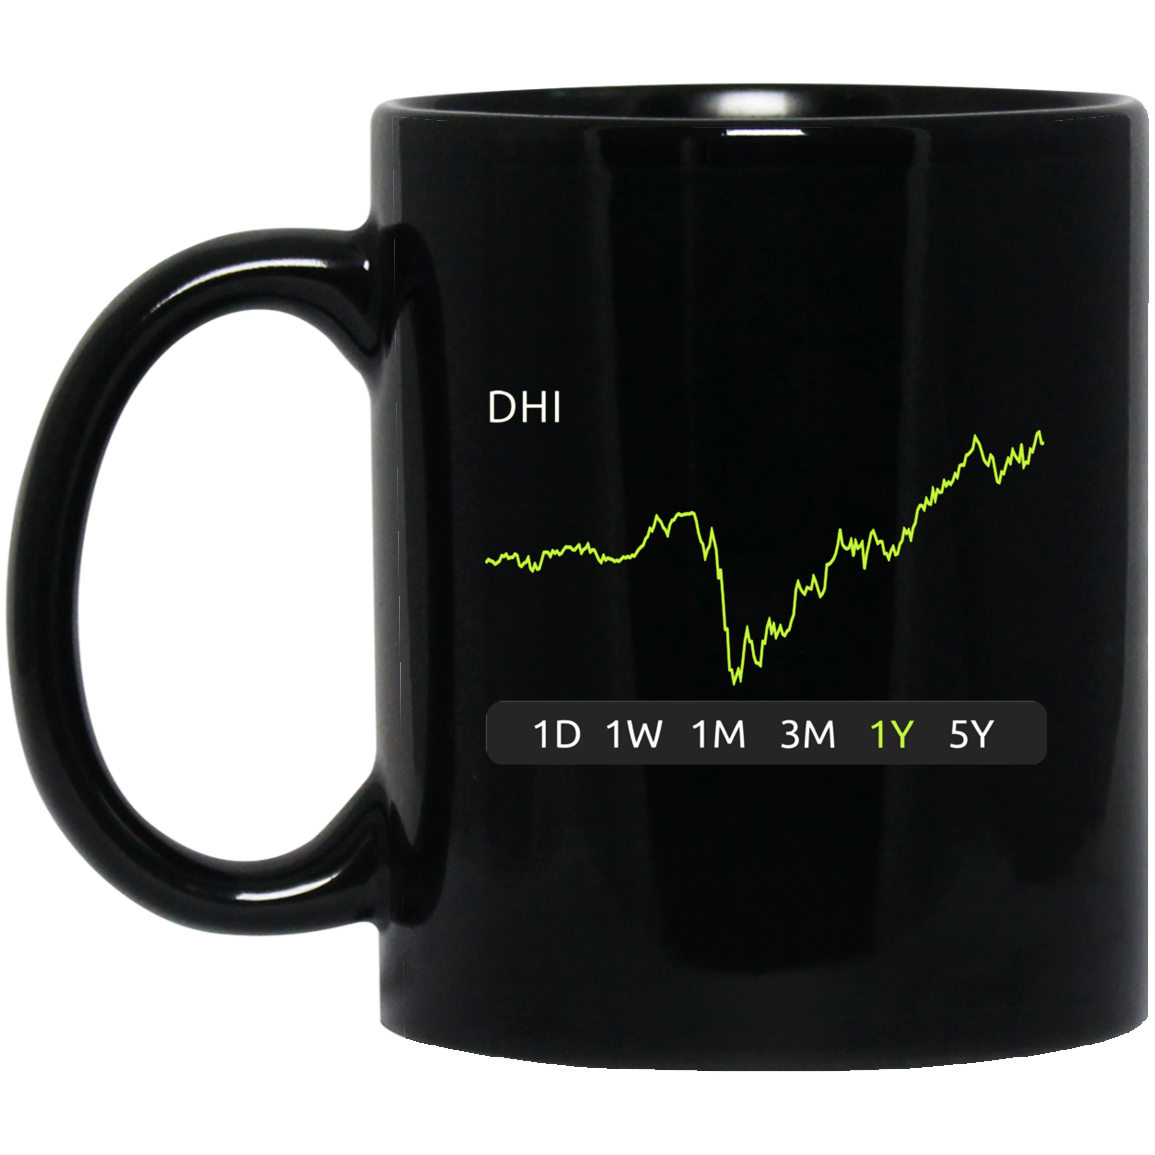 DHI Stock 1y Mug